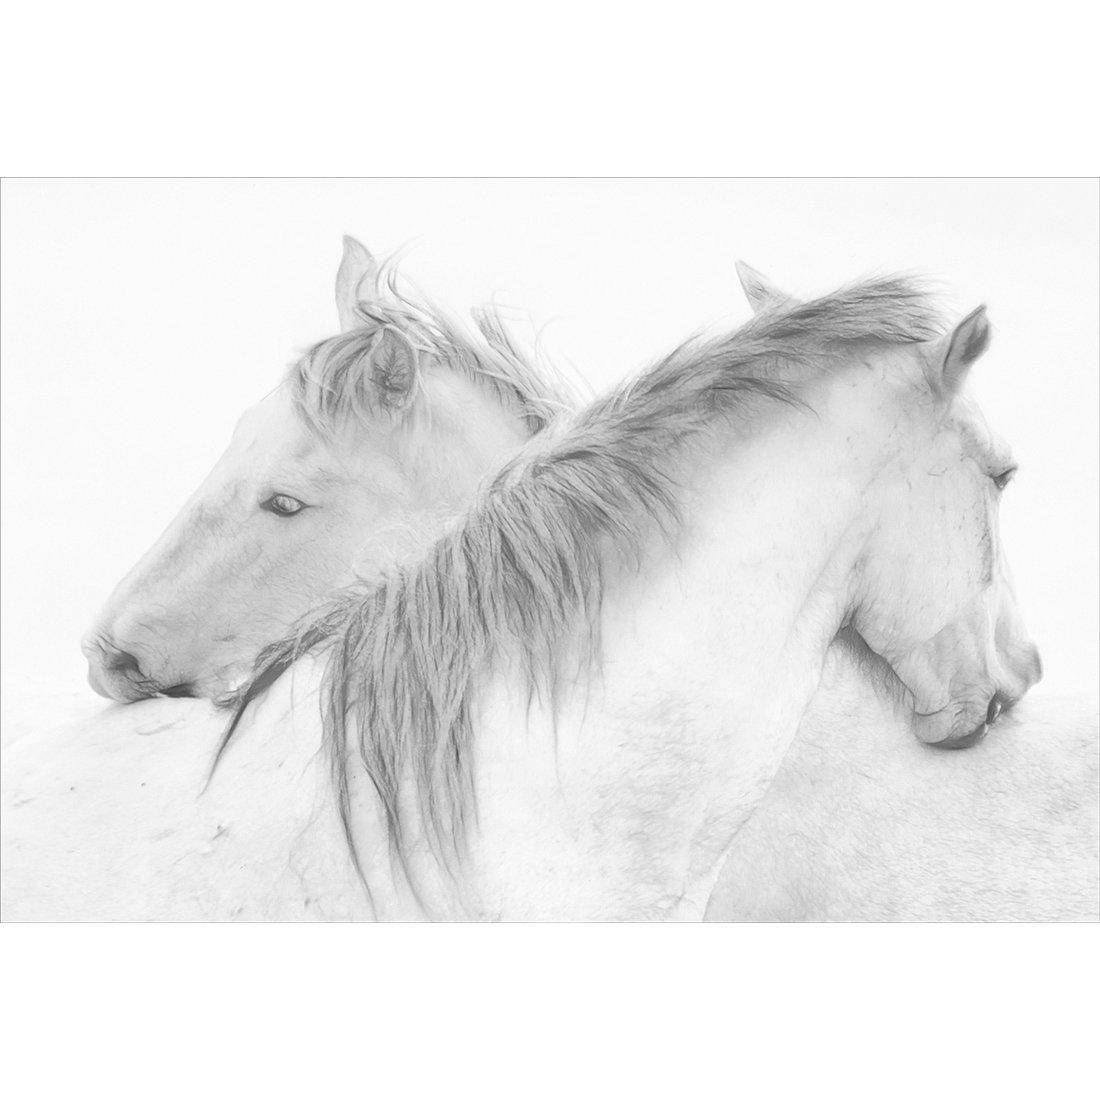 Horses by Marie-Anne Stas Canvas Art-Canvas-Wall Art Designs-45x30cm-Canvas - No Frame-Wall Art Designs